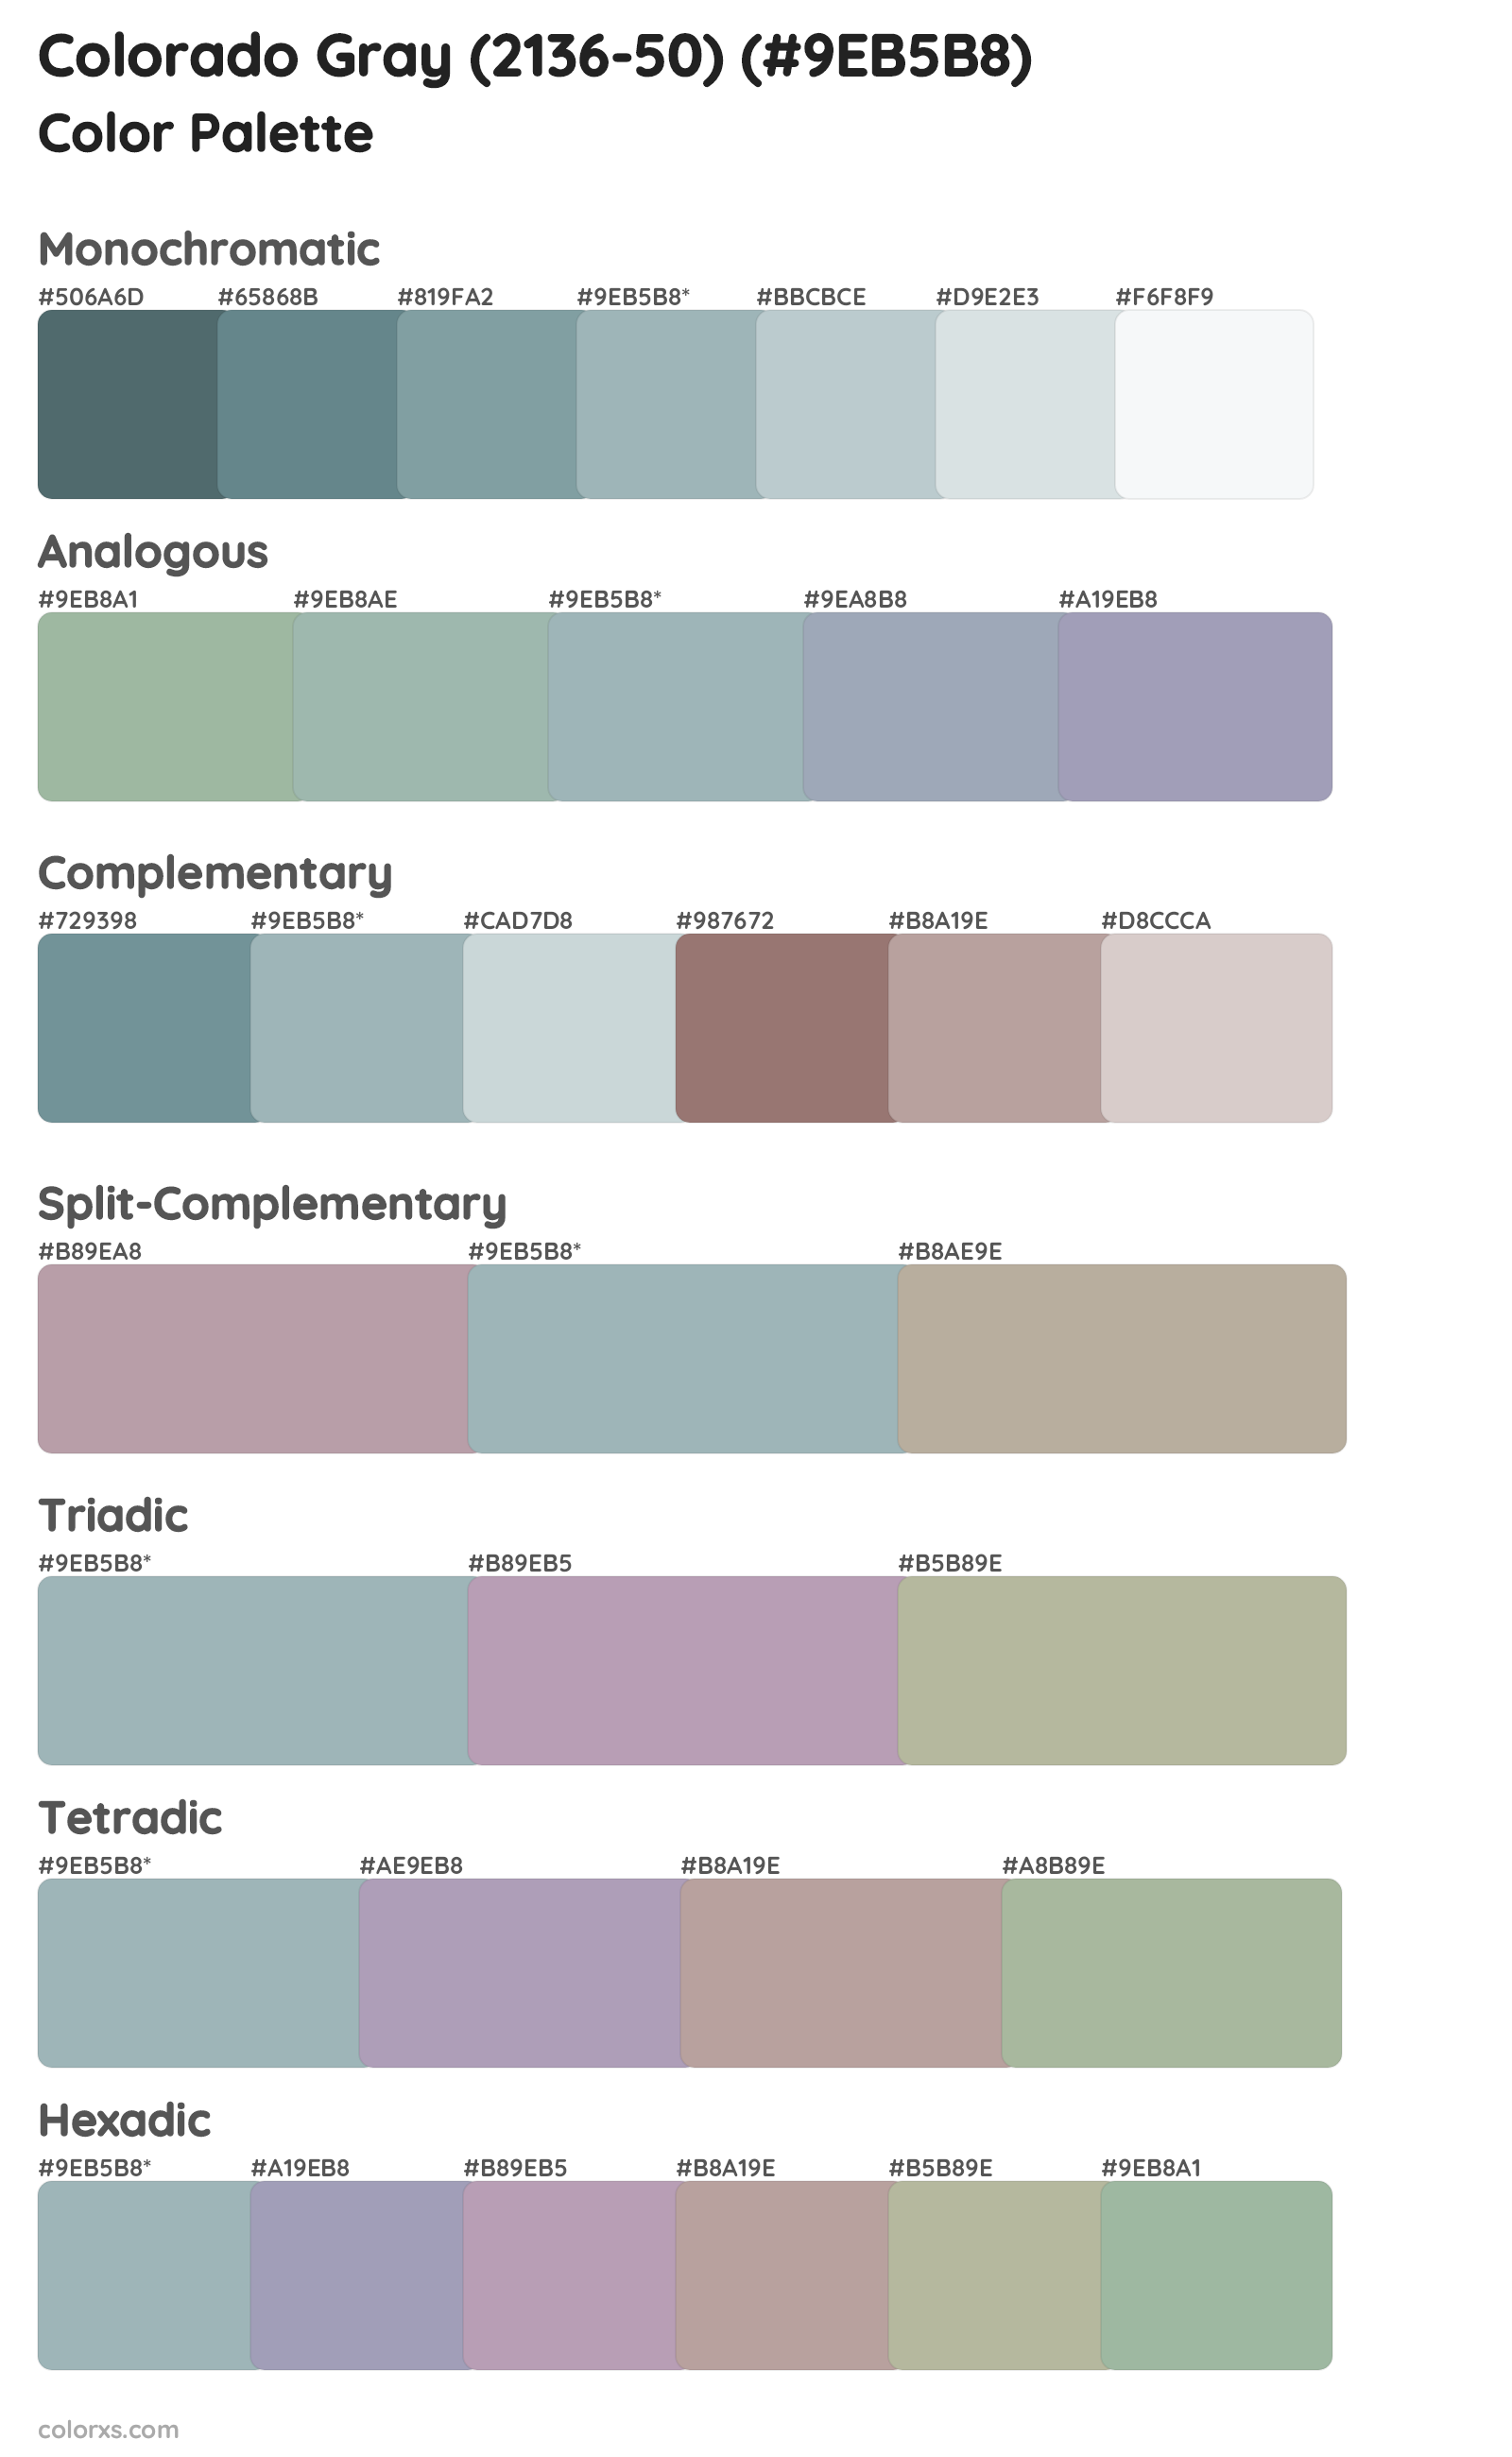 Colorado Gray (2136-50) Color Scheme Palettes